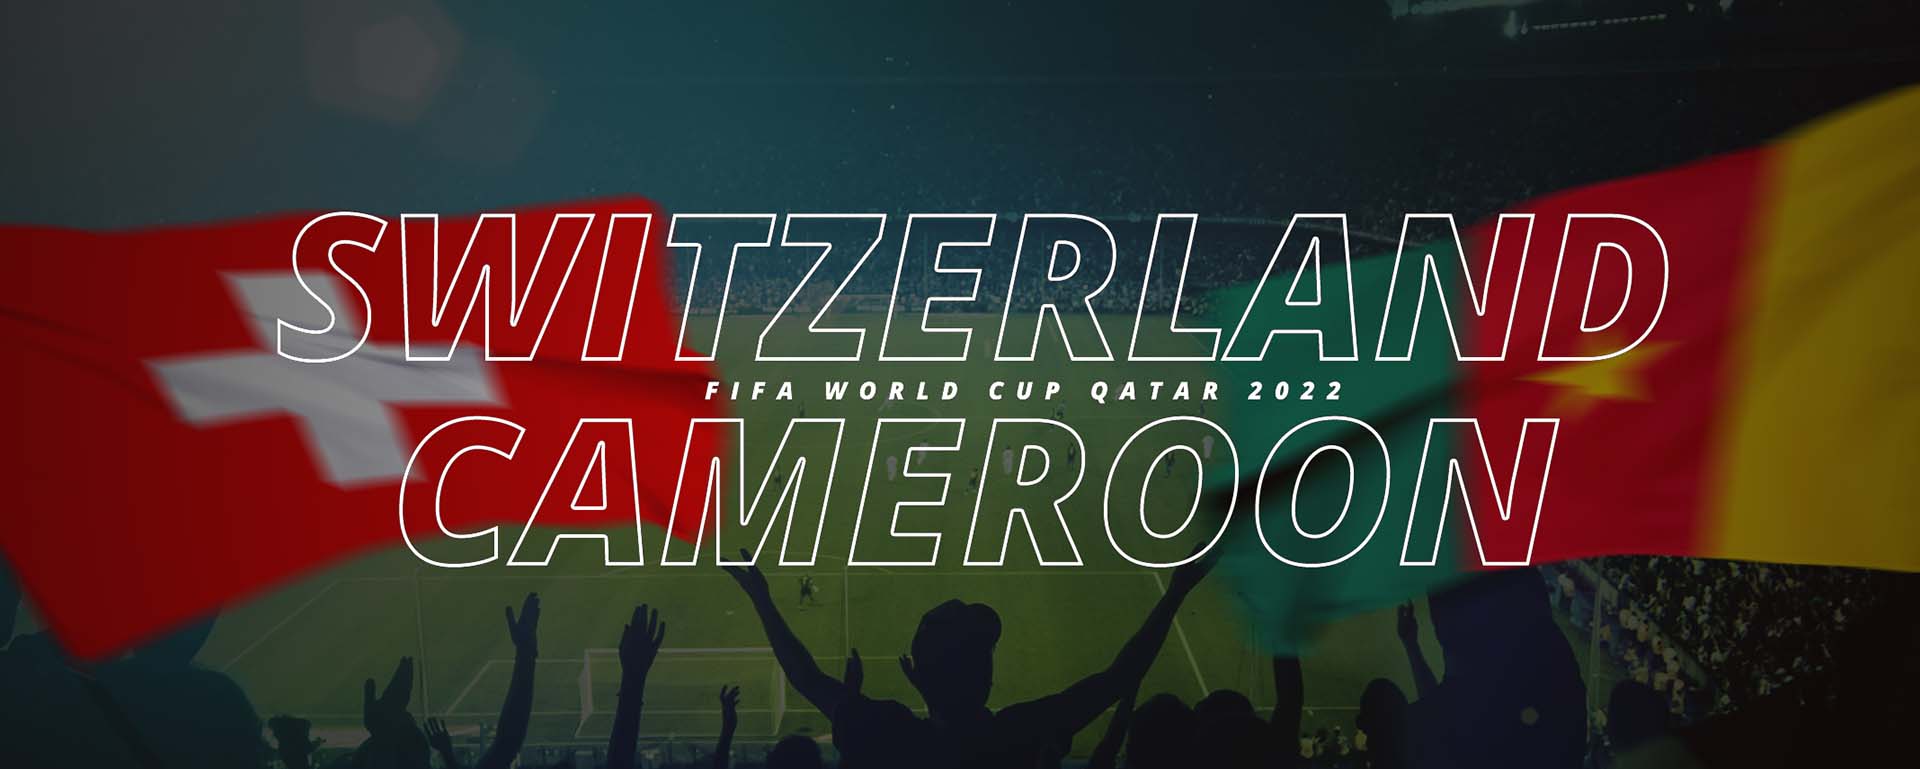 SWITZERLAND VS CAMEROON| FIFA WORLD CUP QATAR 2022